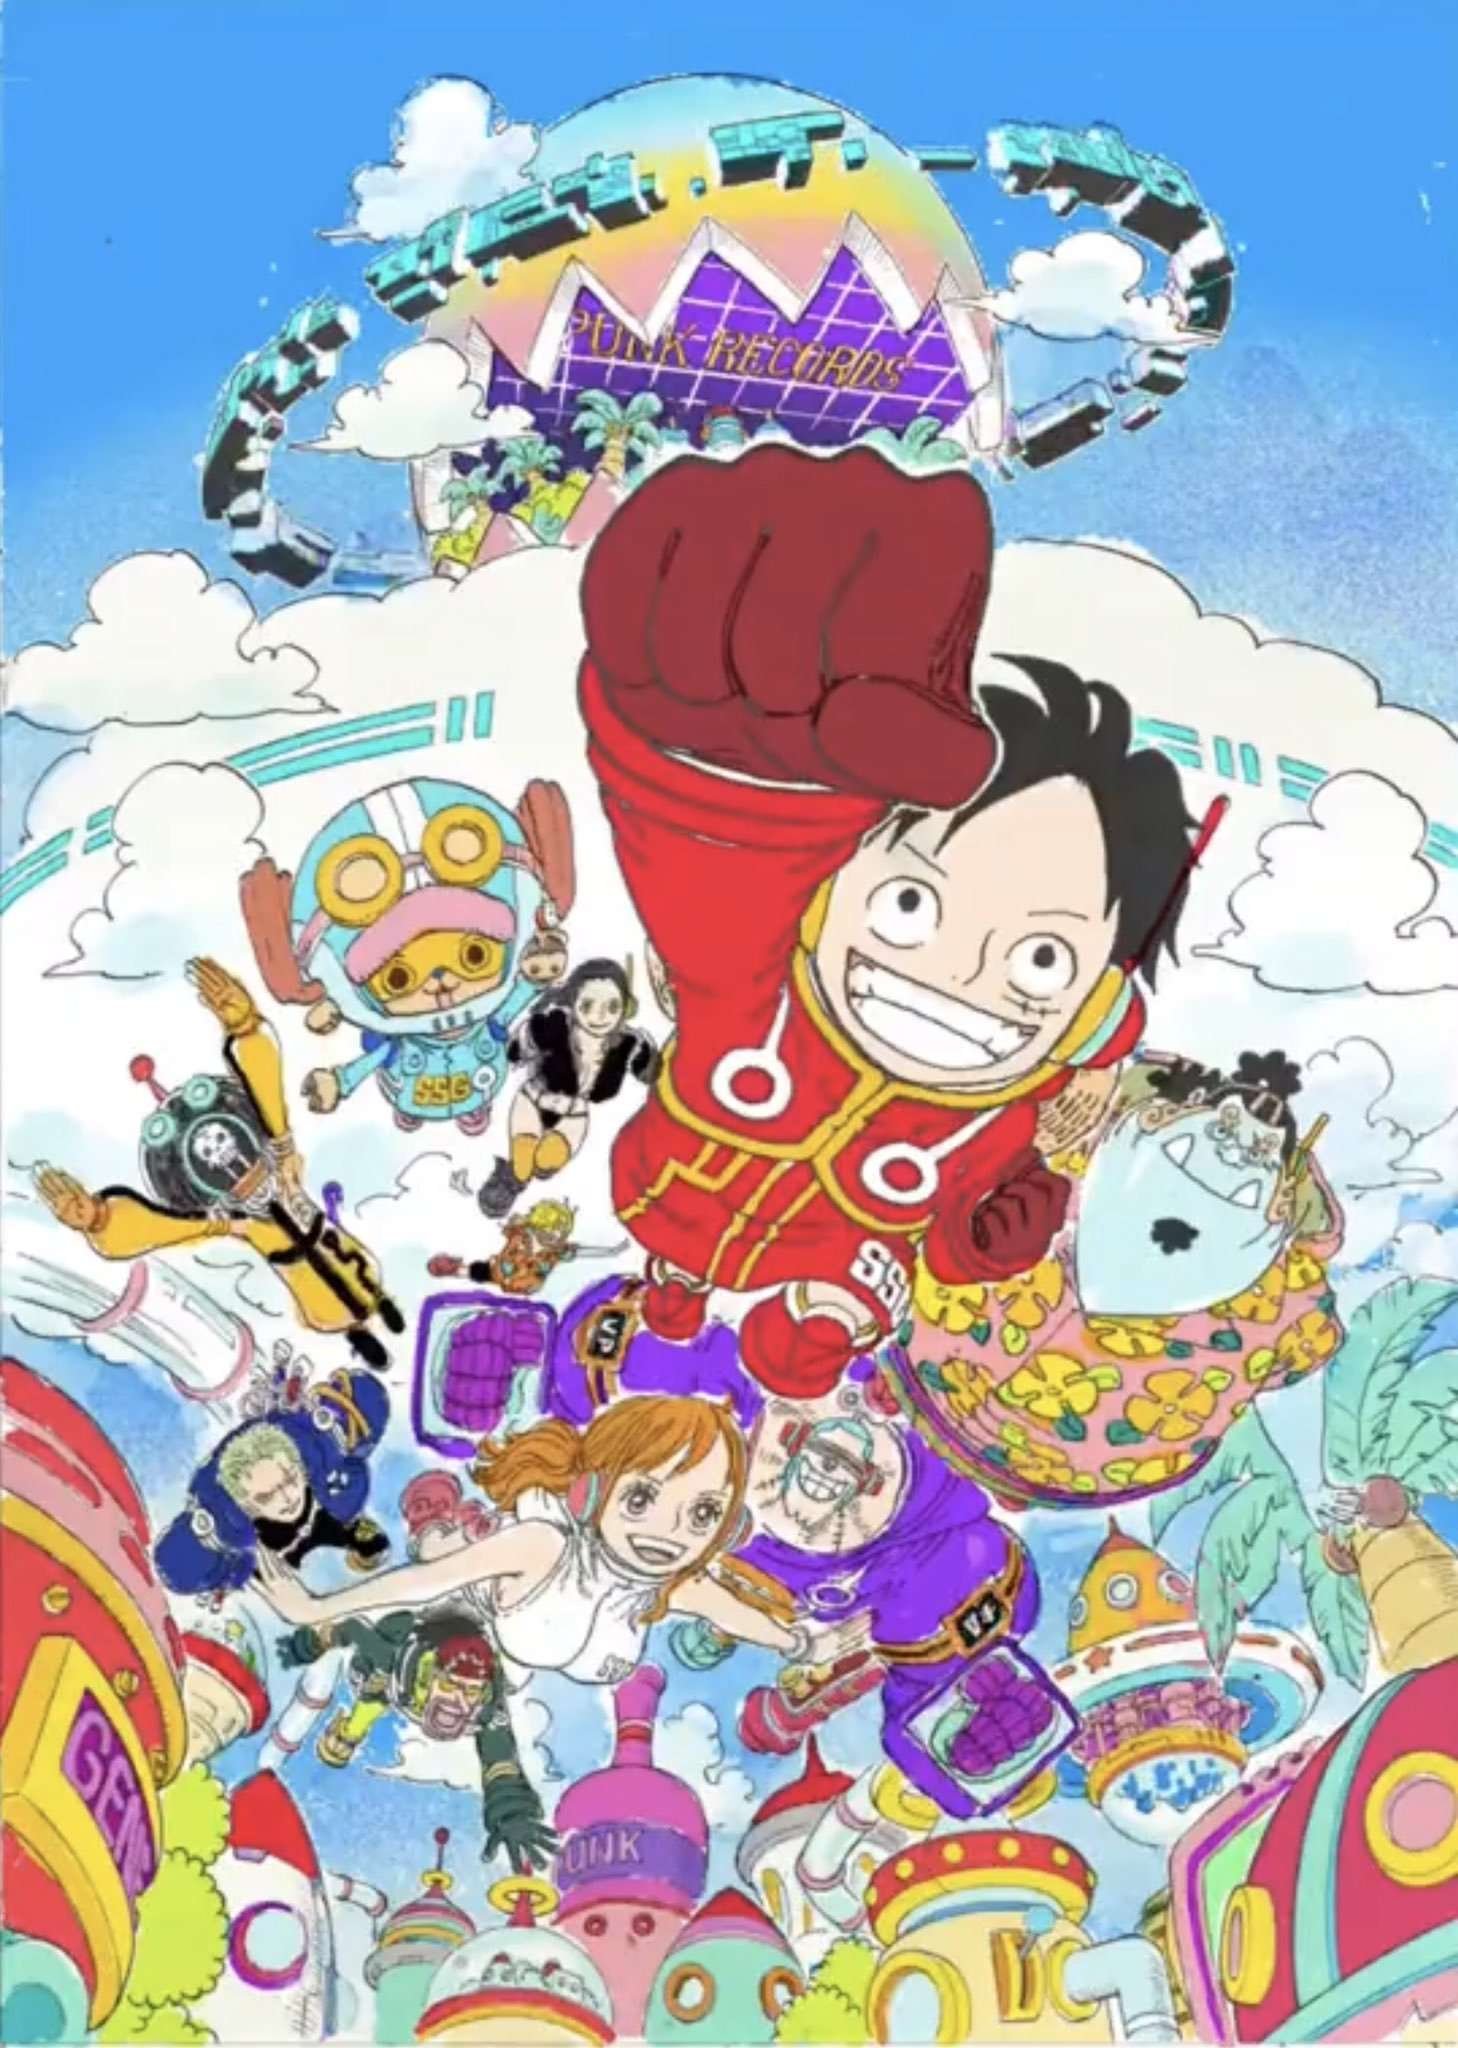 One Piece Birthday Calendar – The Library of Ohara